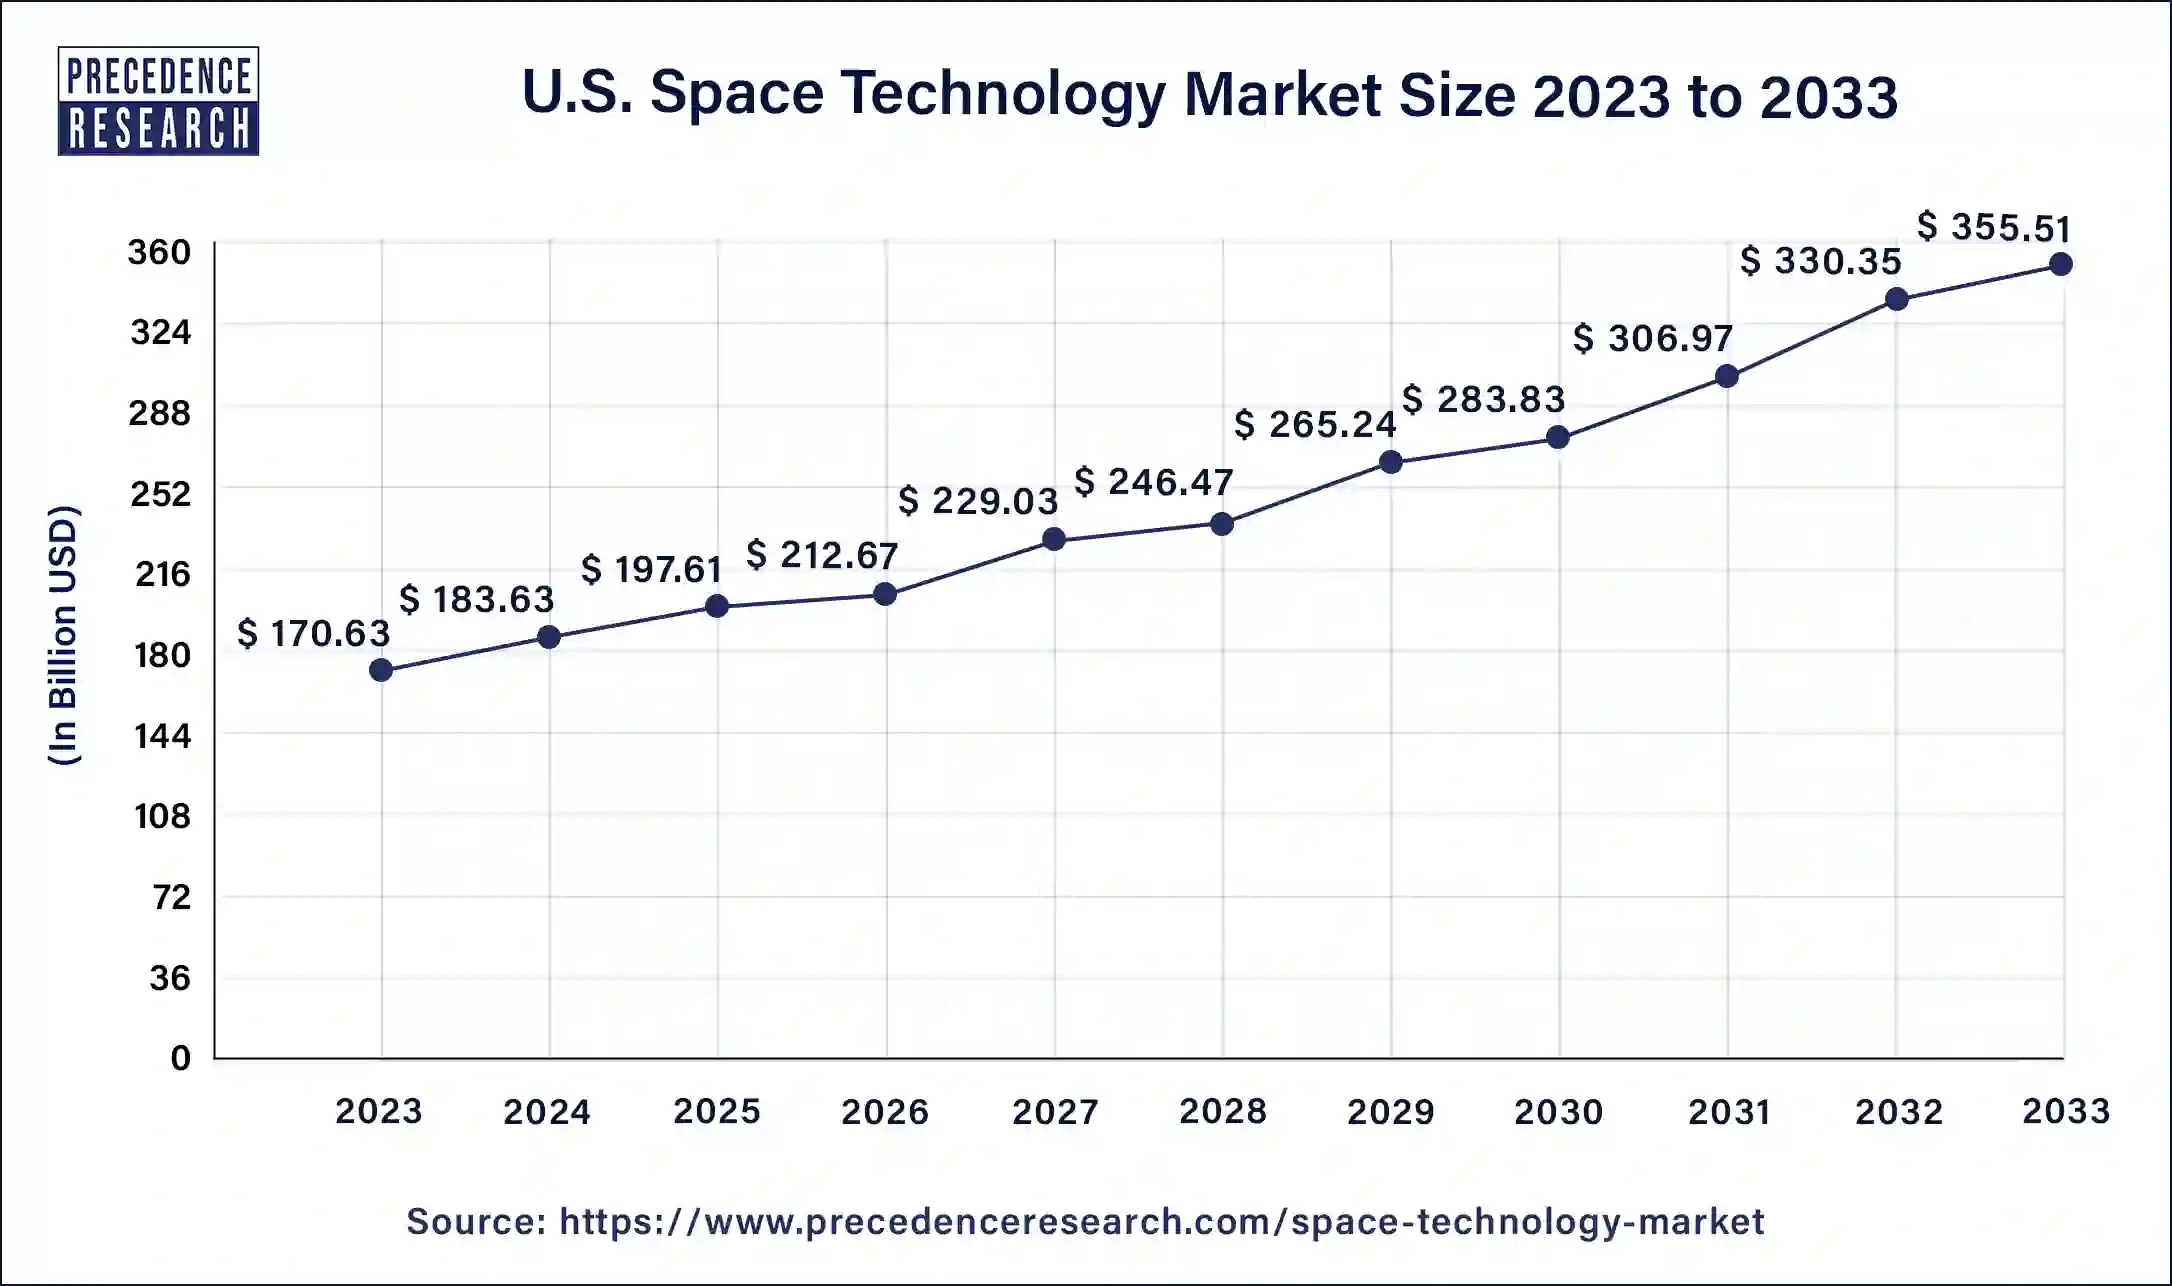 U.S. Space Technology Market Size 2024 to 2033